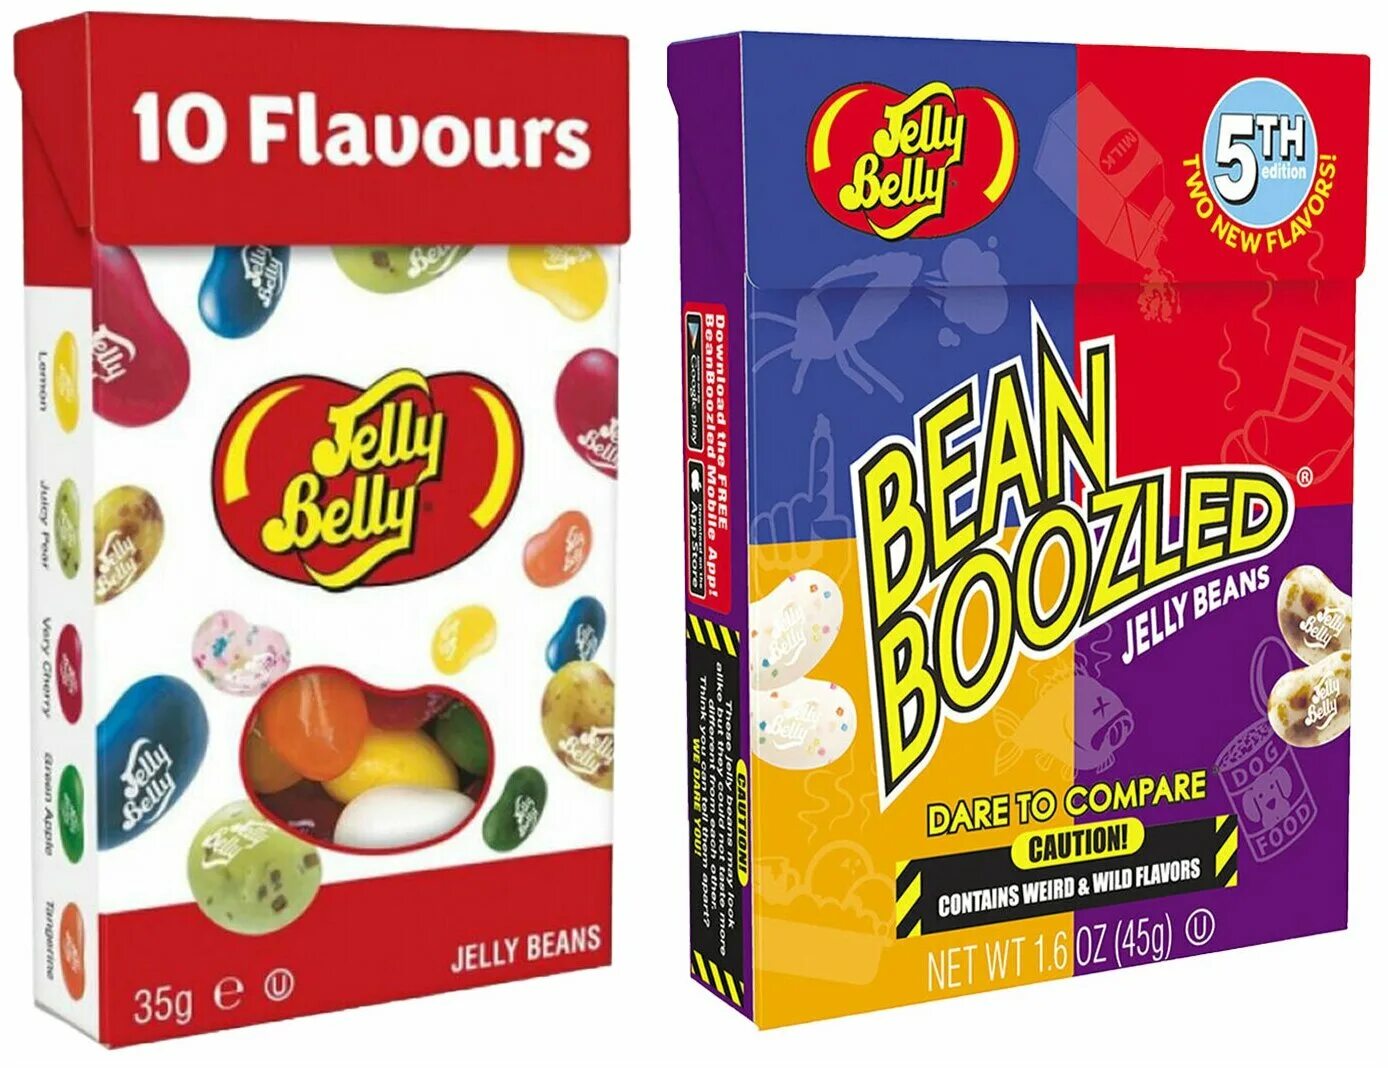 Bean boozled вкусы. Конфеты Jelly belly Bean Boozled. Драже Jelly belly Bean Boozled 45гр 6th. Jelly belly Bean Boozled вкусы. Конфеты с разными вкусами Джелли Белли.